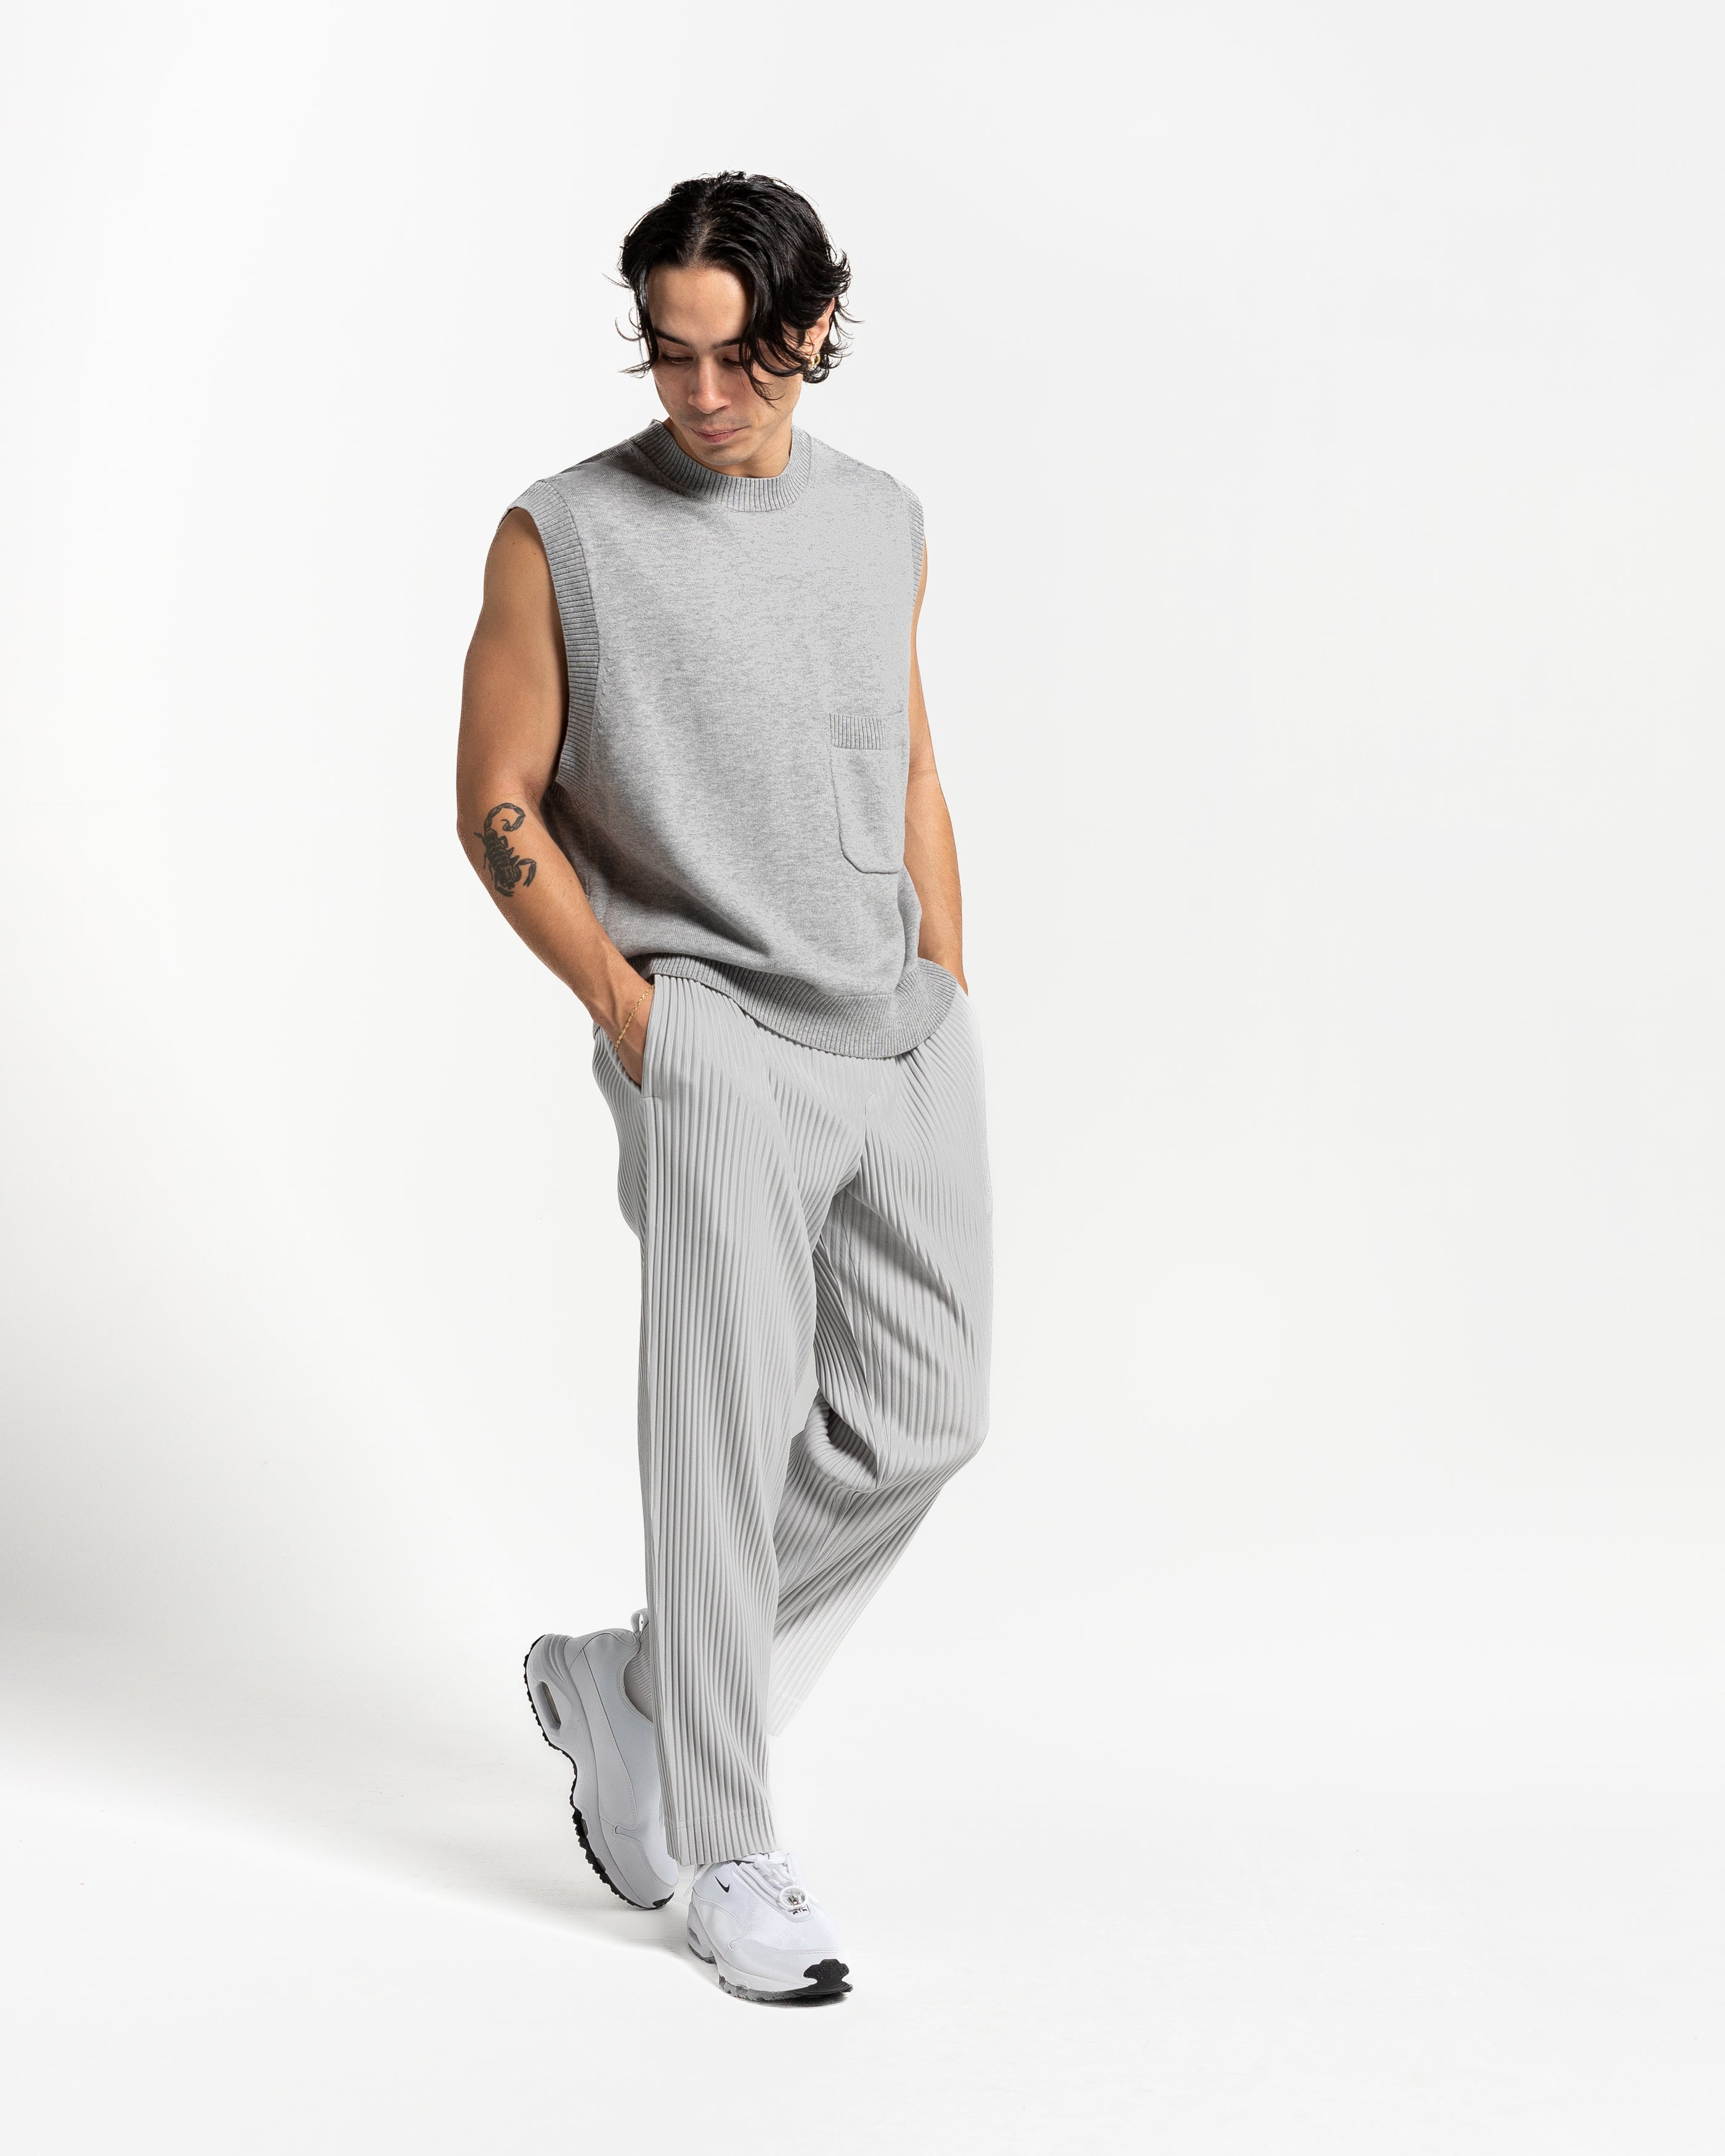 Basic Pleated Trouser in Light Grey